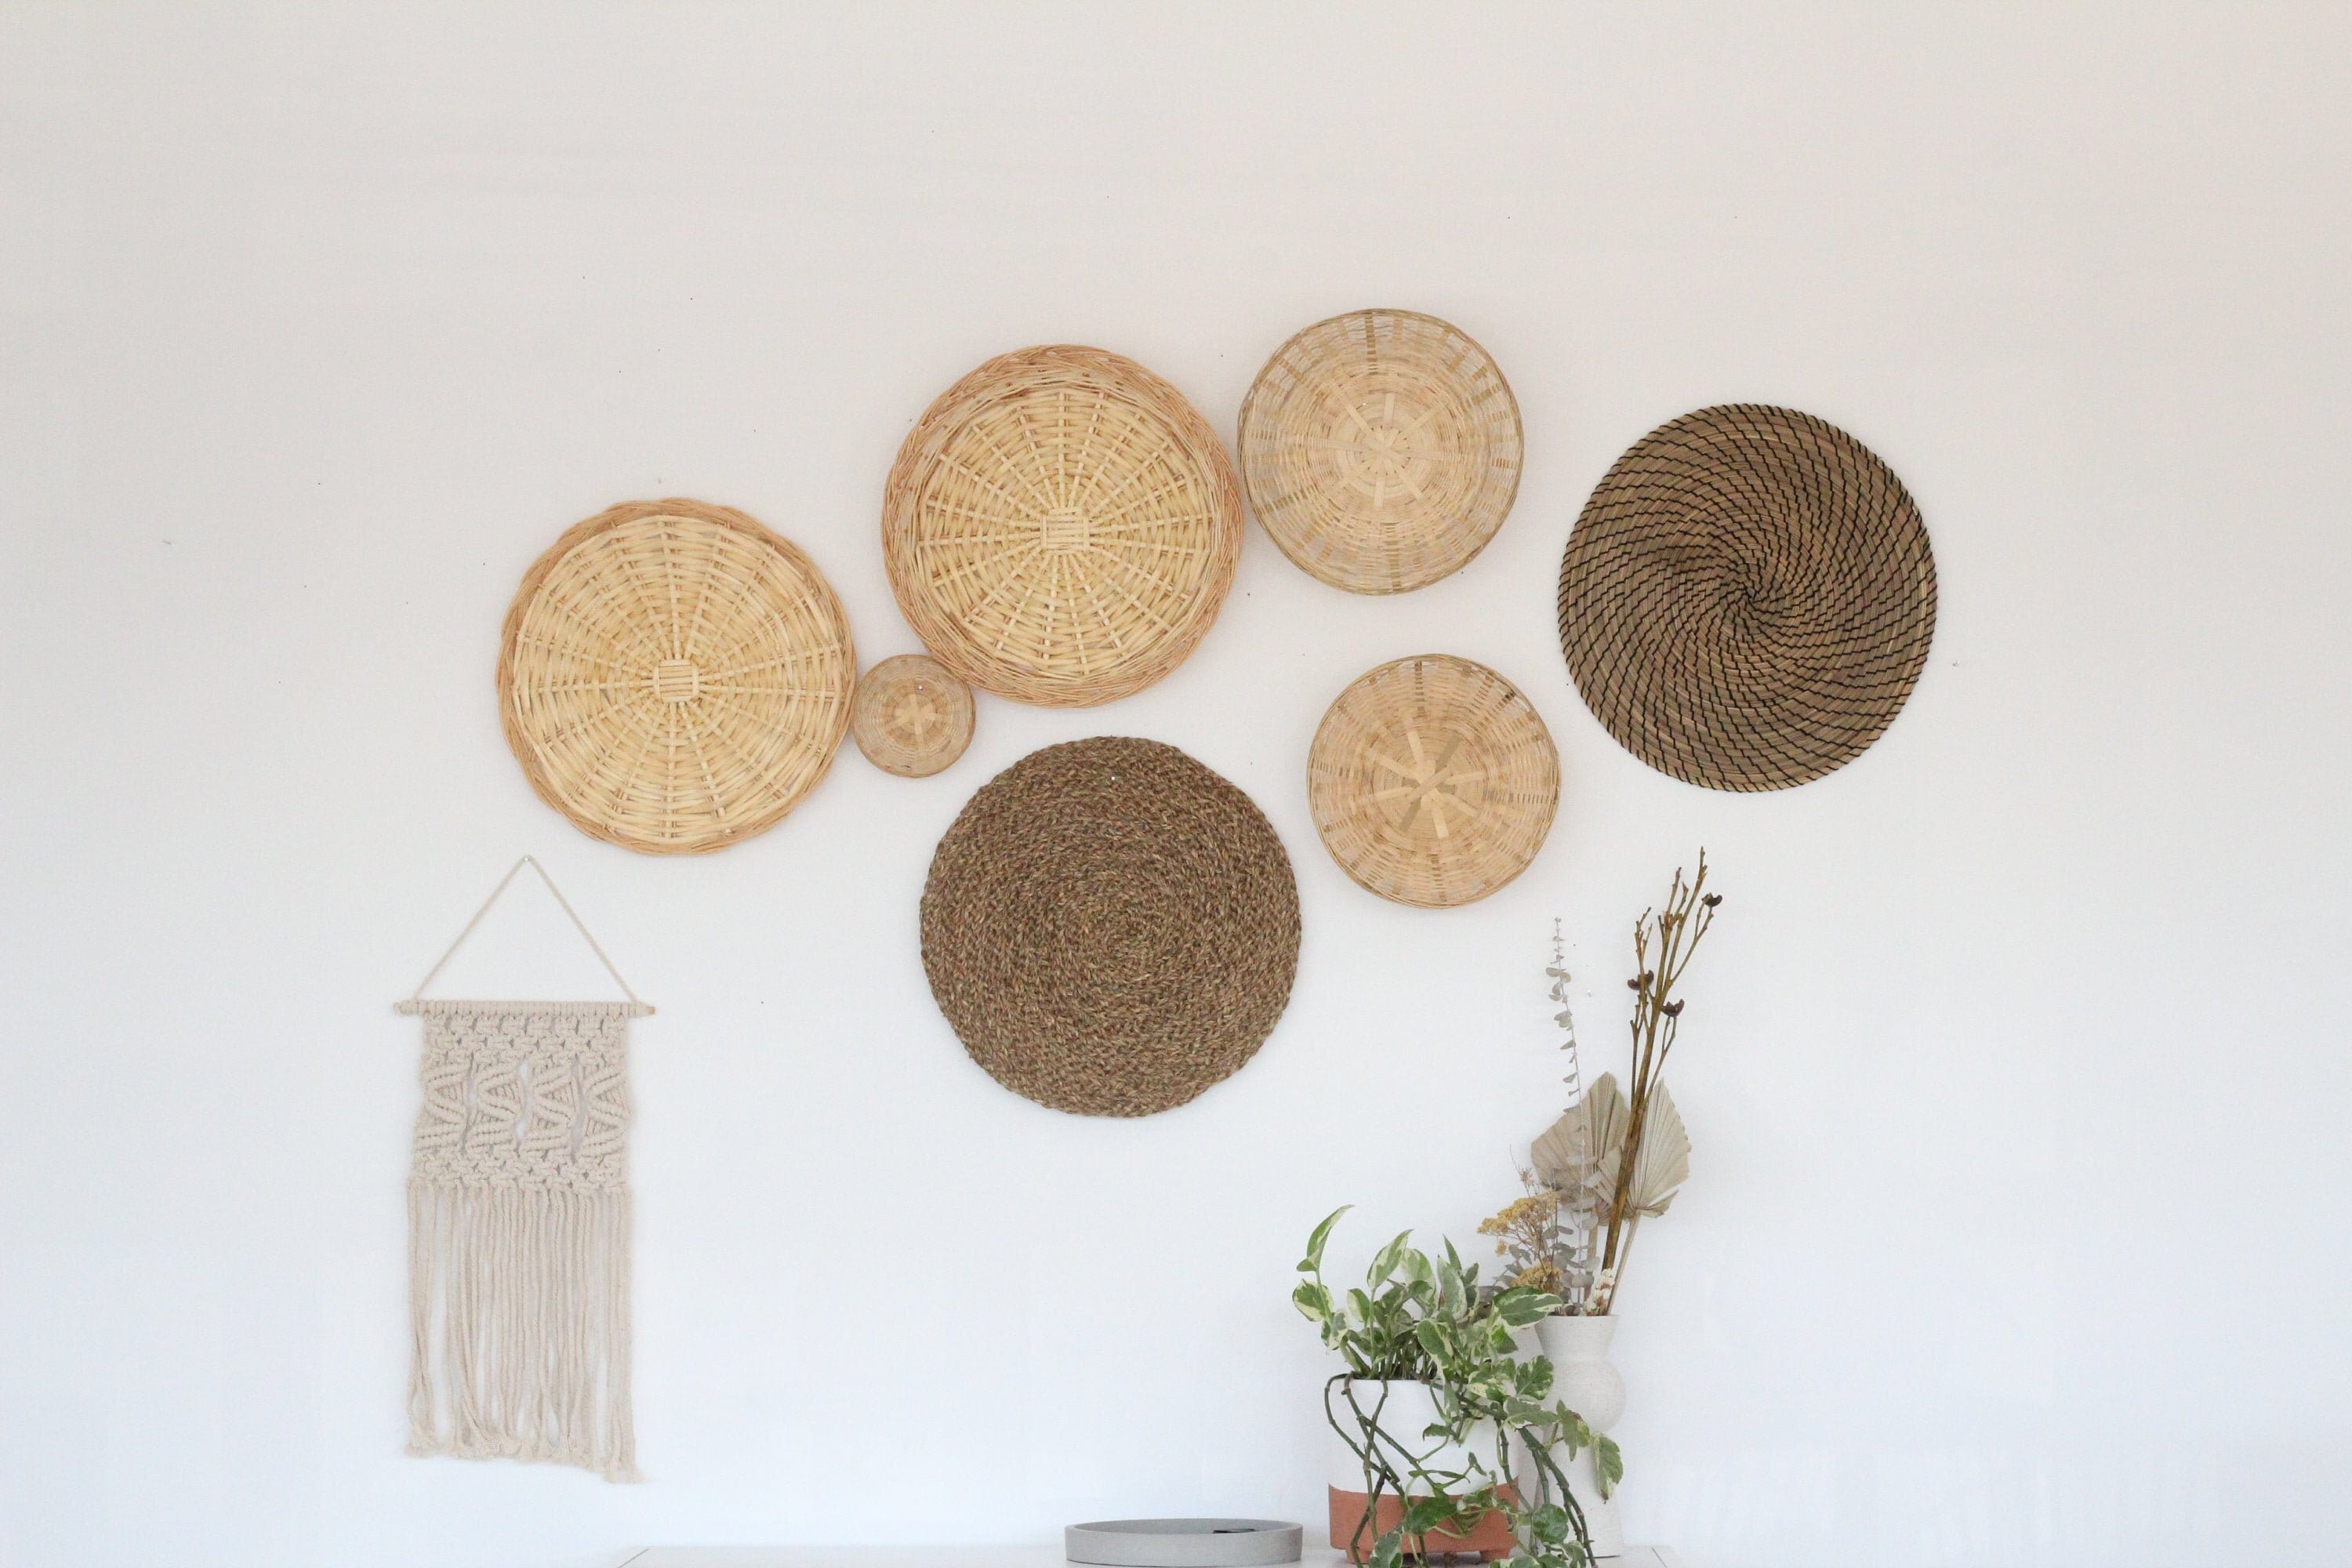 Woven Boho Curated Wall Baskets Set